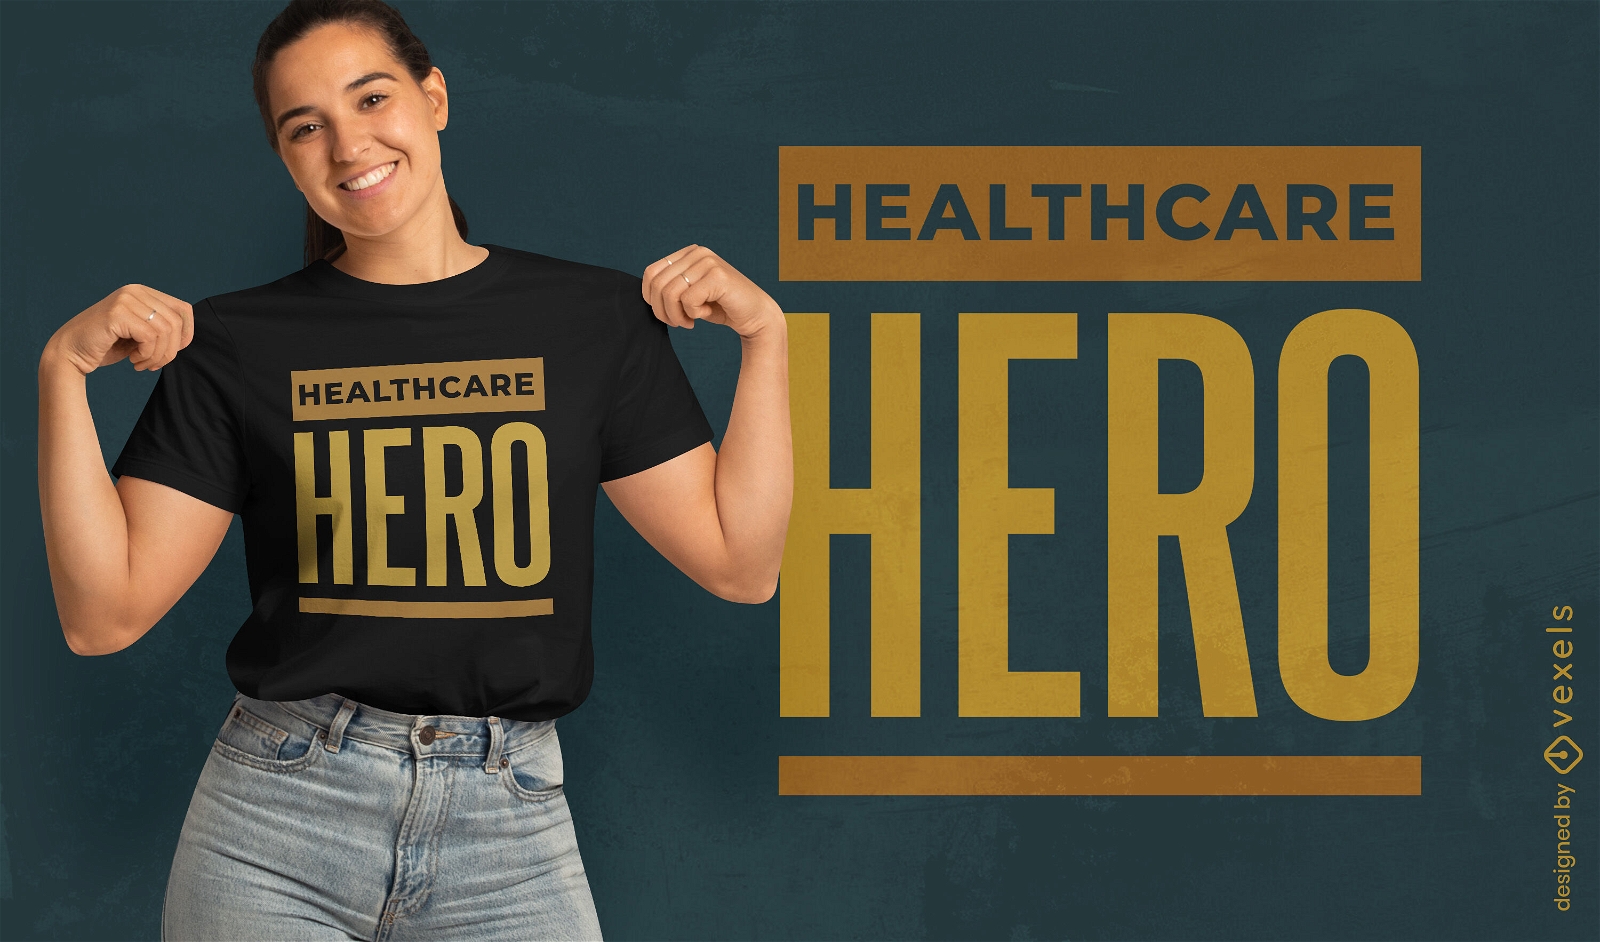 Healthcare hero t-shirt design